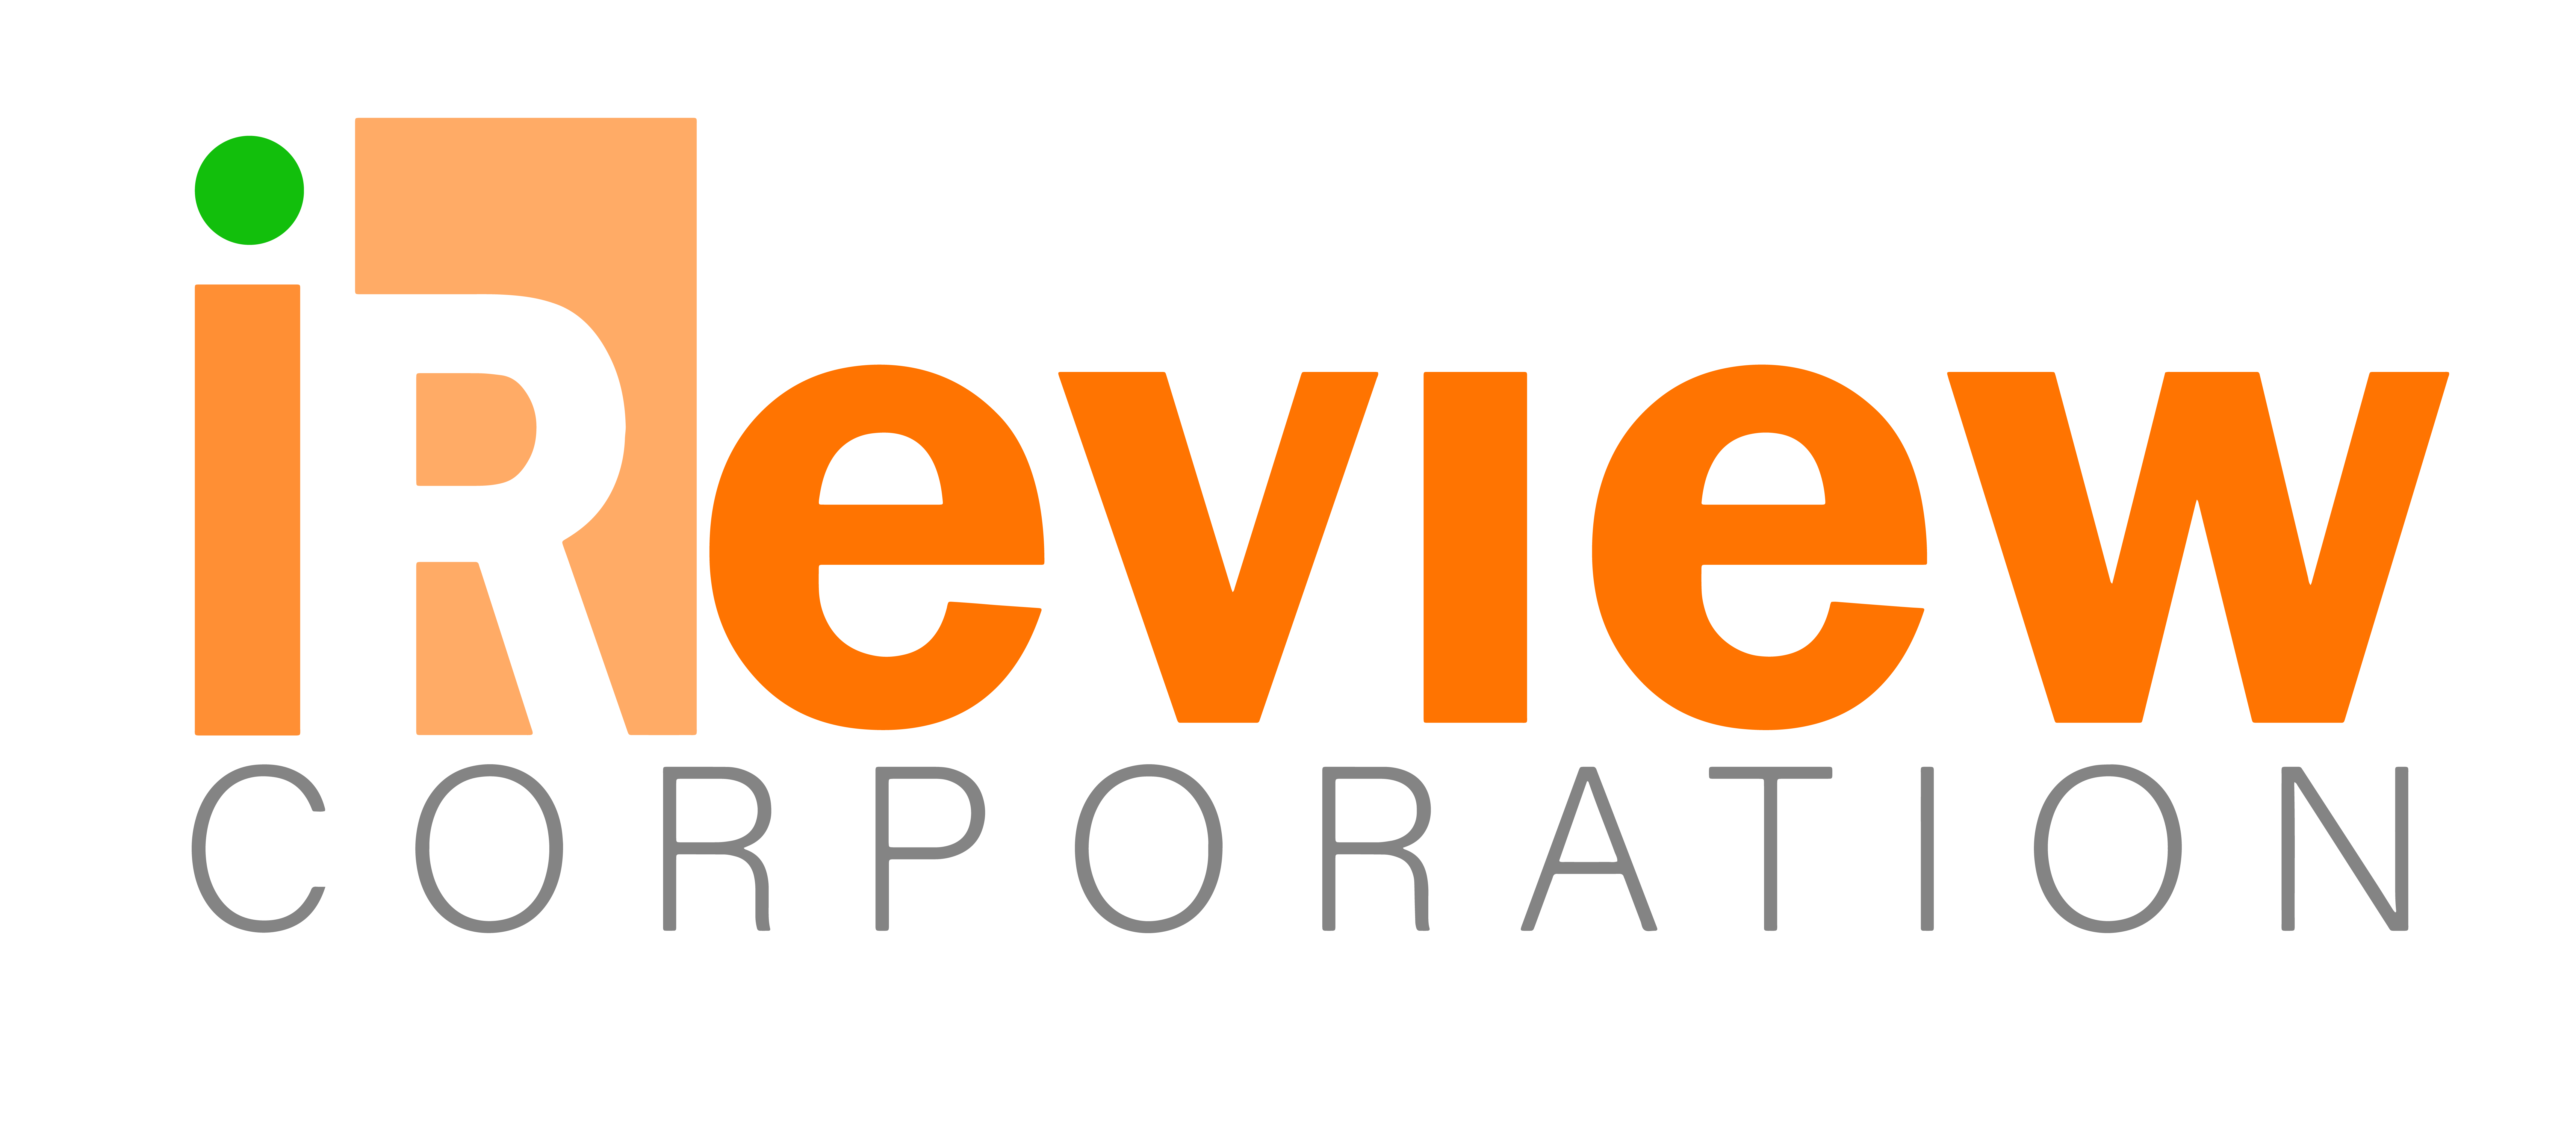 i-Review Corporation